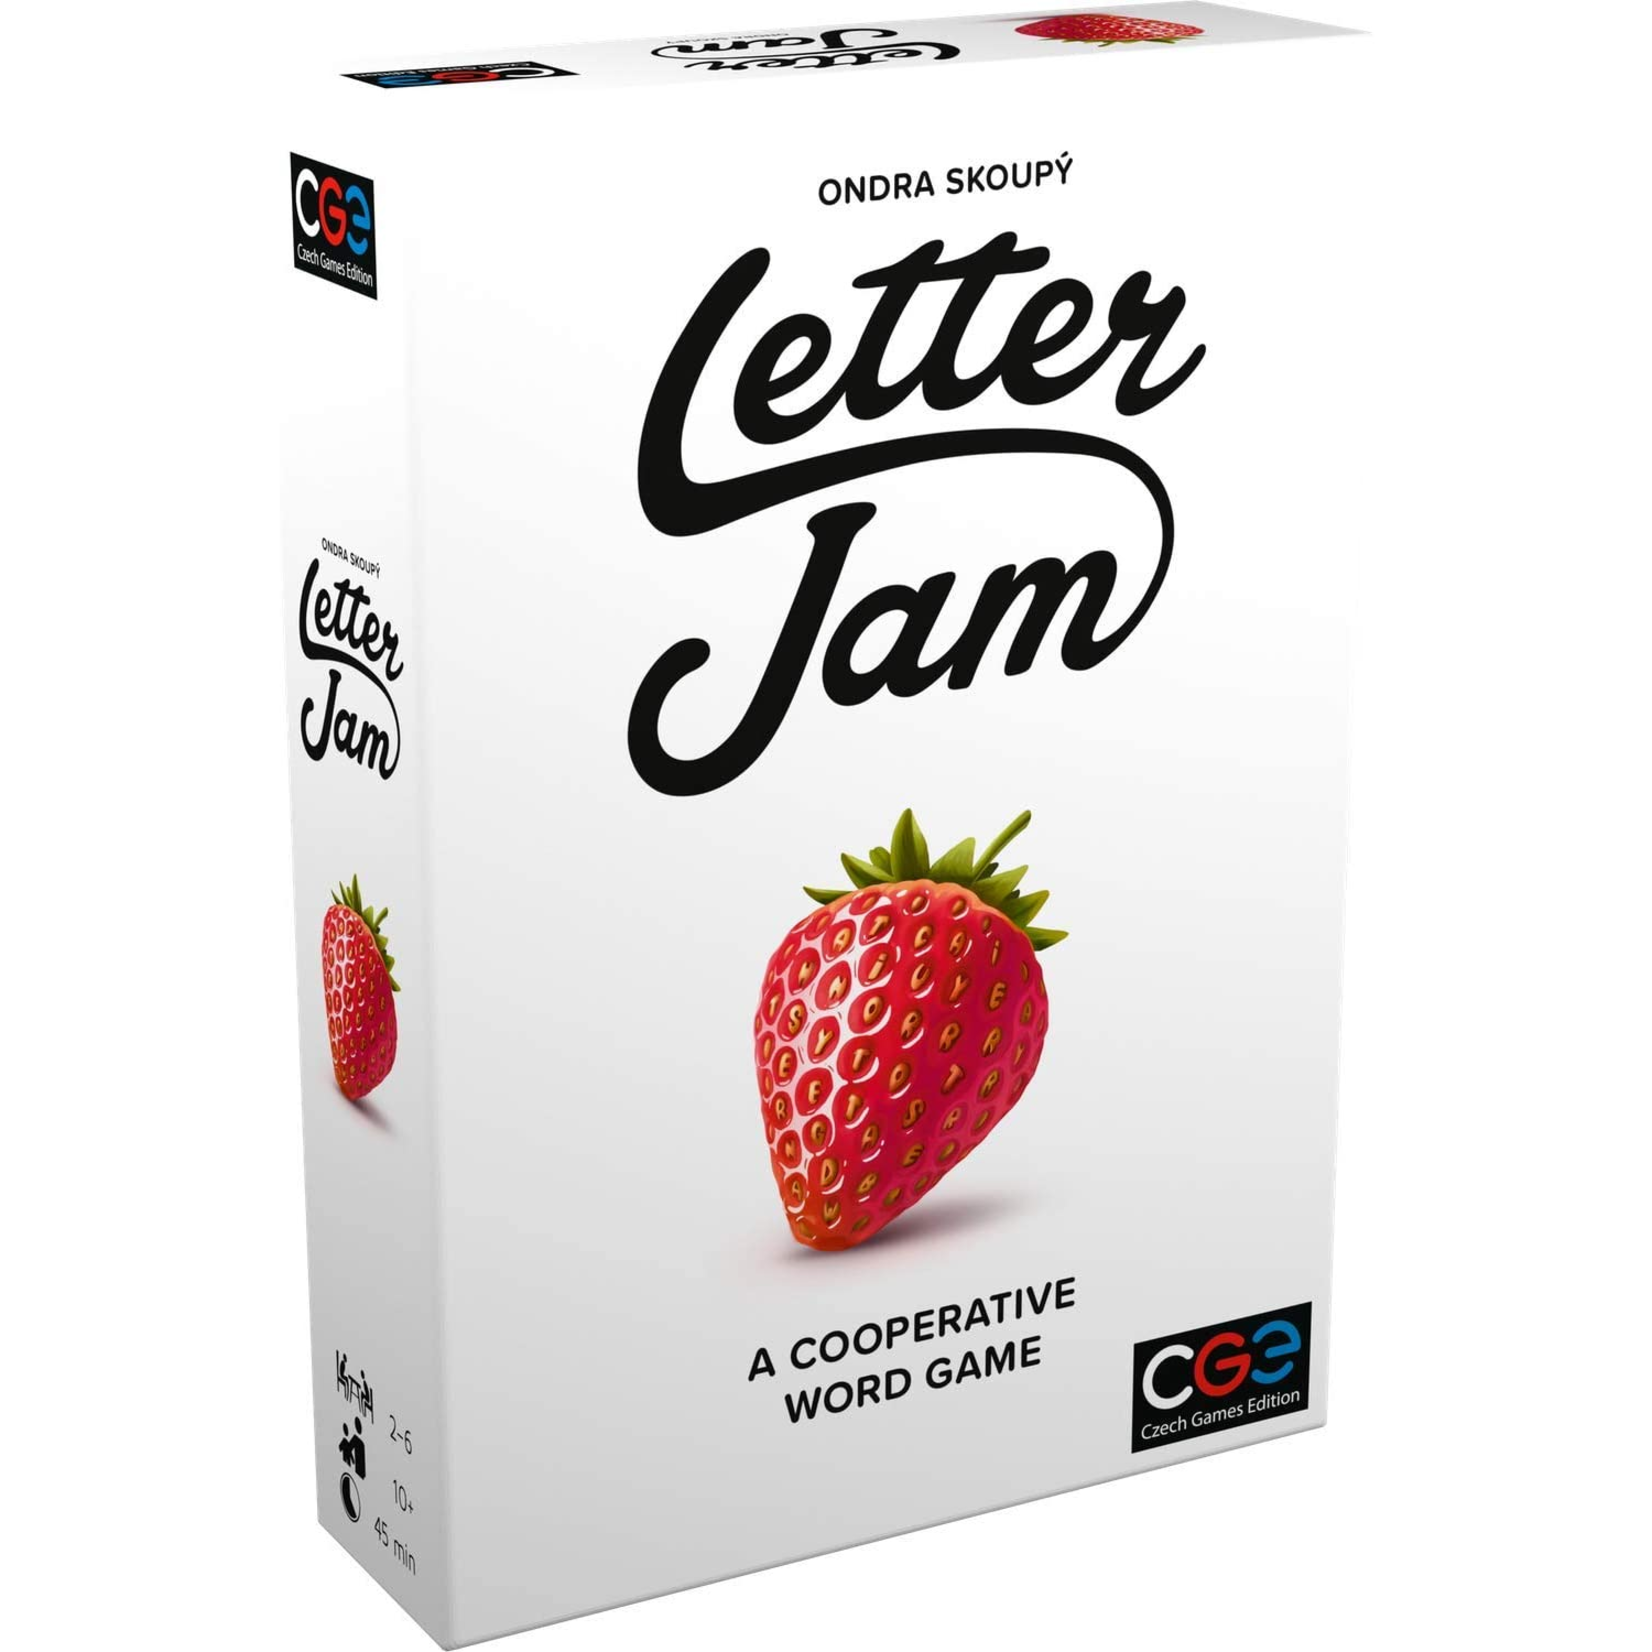 Czech Games Editions Letter Jam